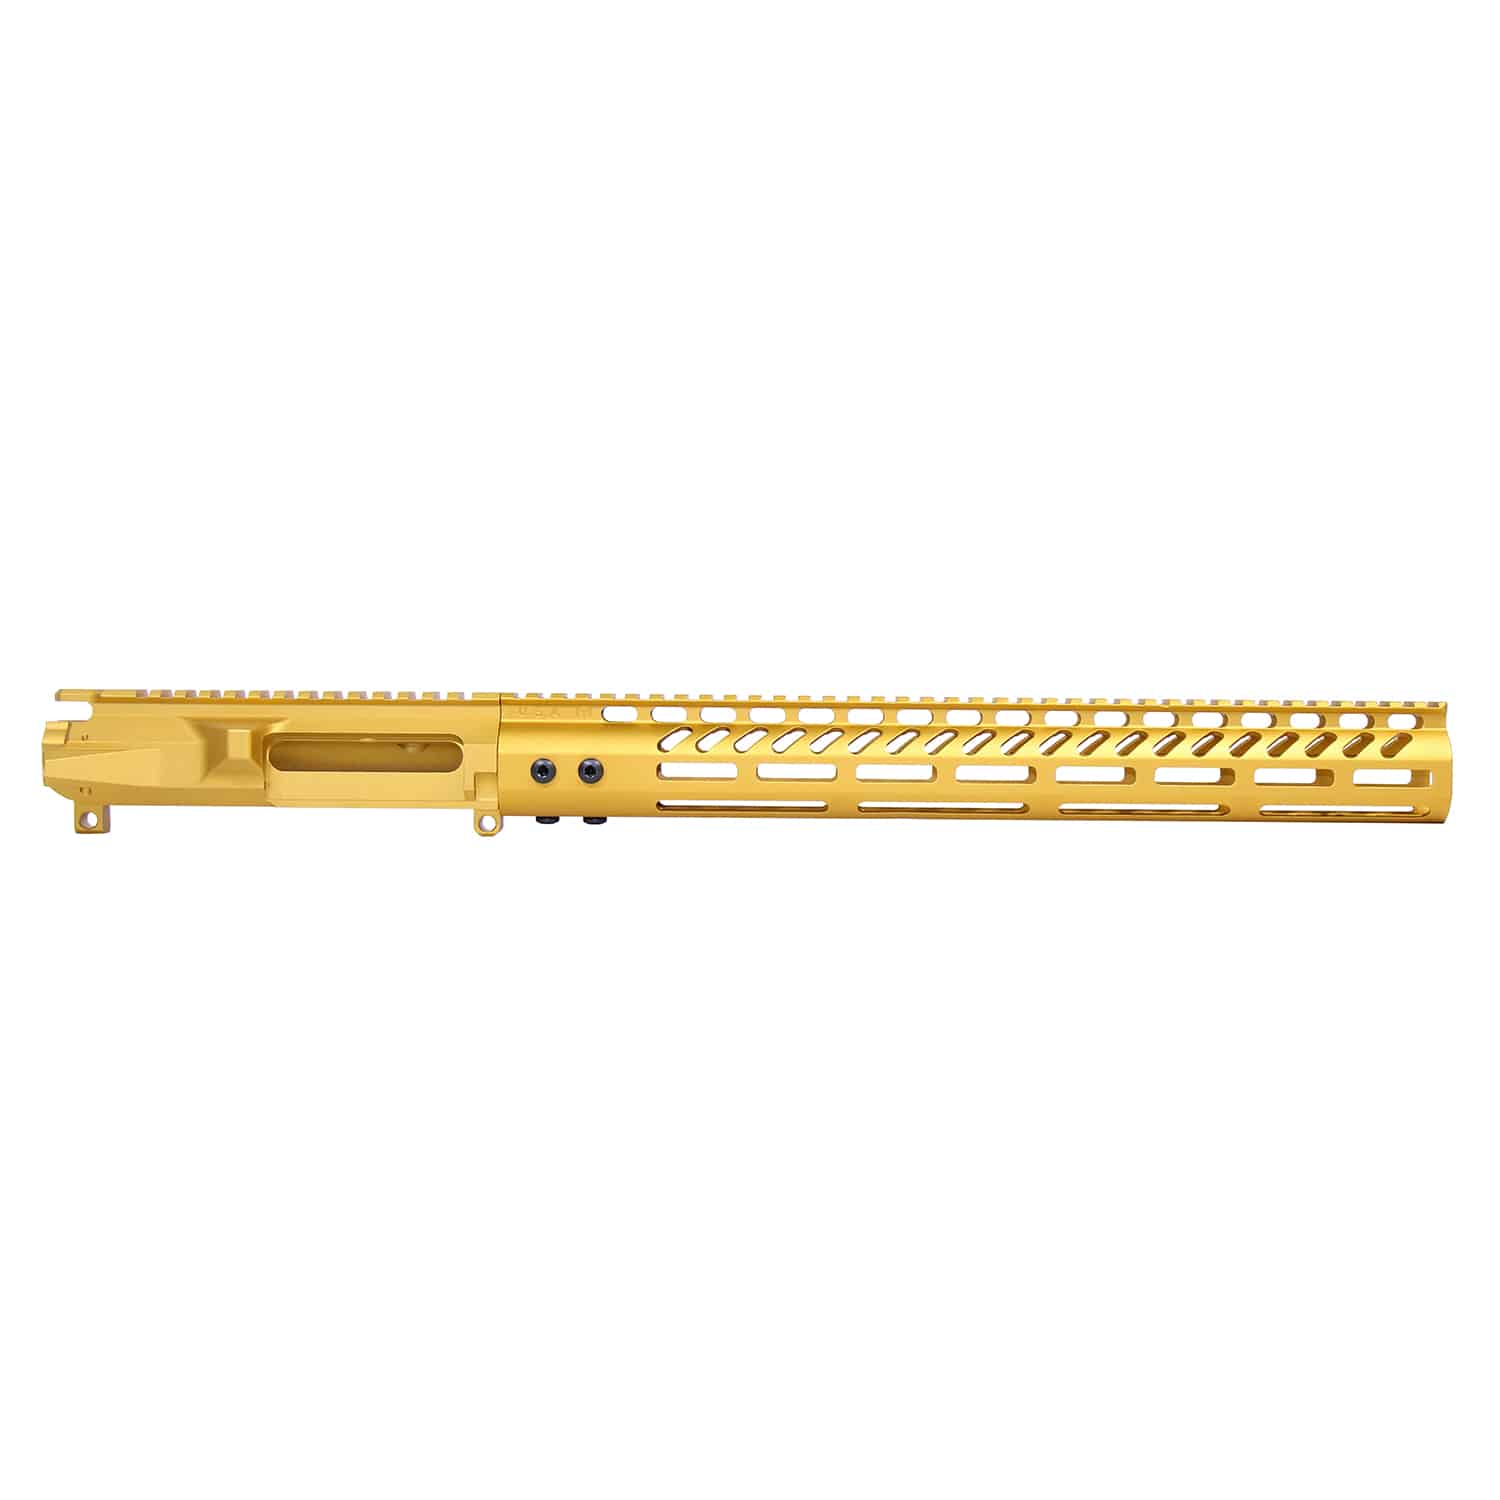 AR-15 Stripped Billet Upper Receiver 15" M-LOK Handguard Combo Set in Anodize Gold